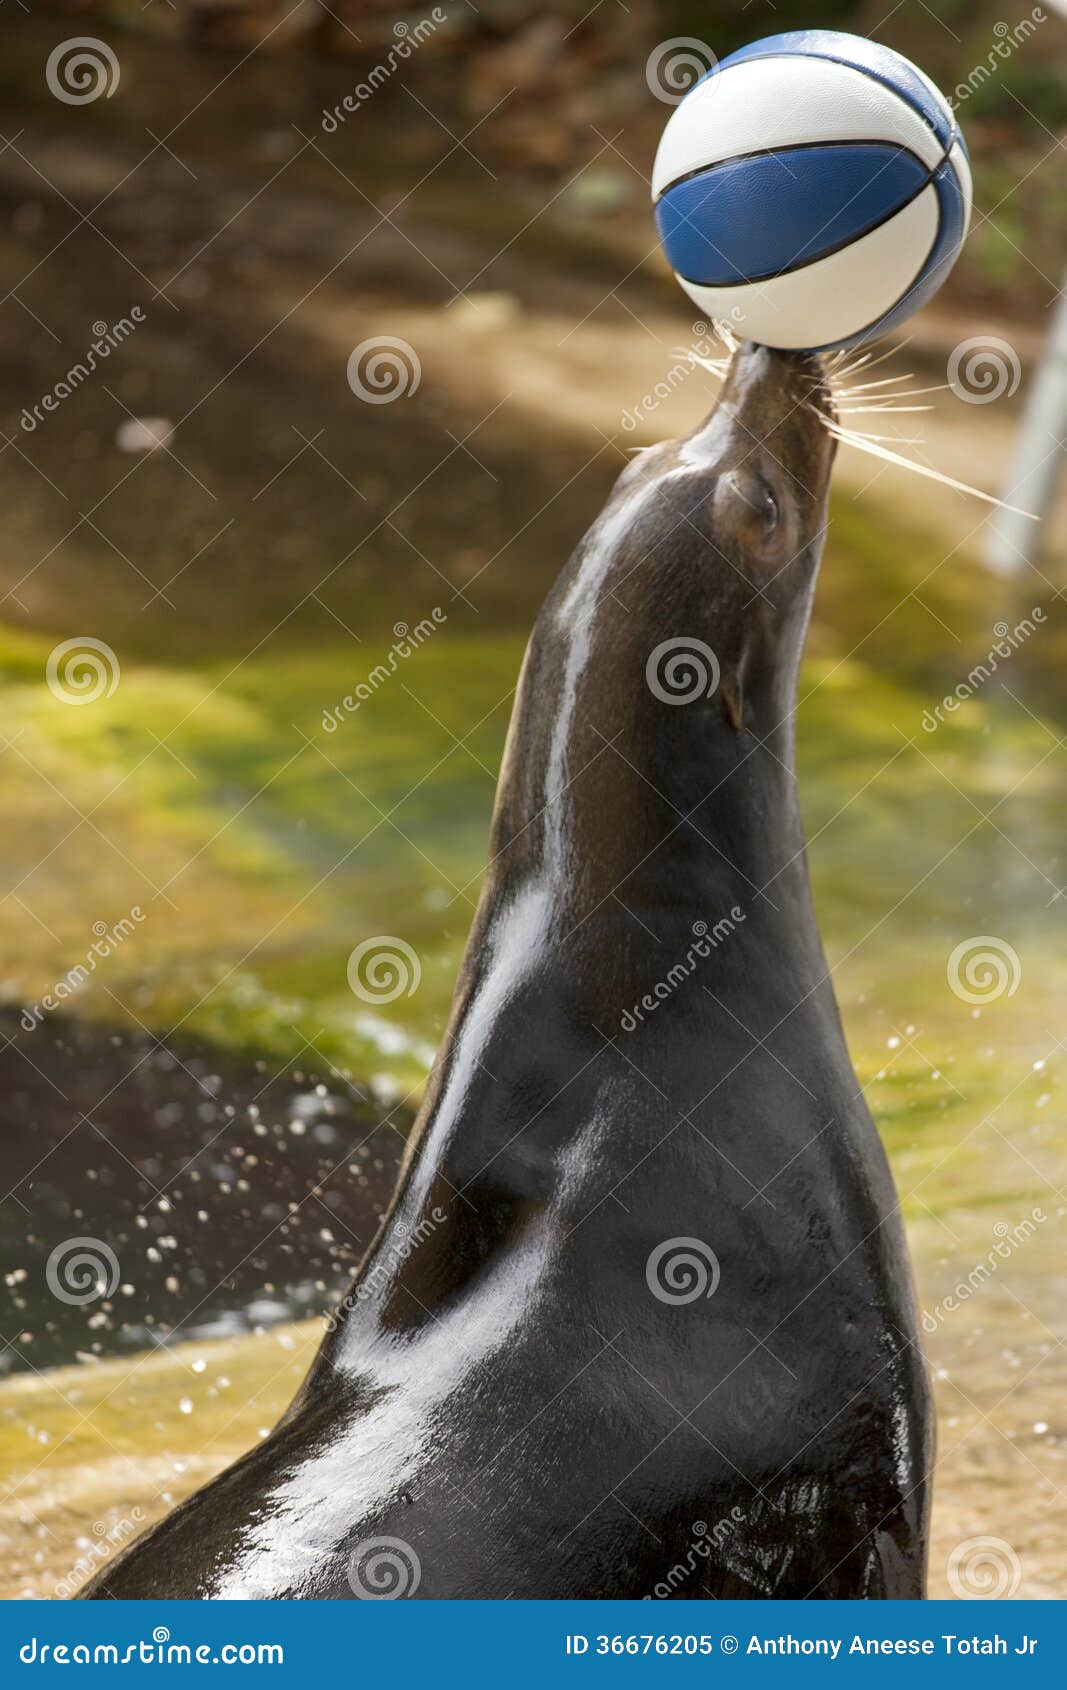 california sea lion (zalophus californianus) balancing a ball